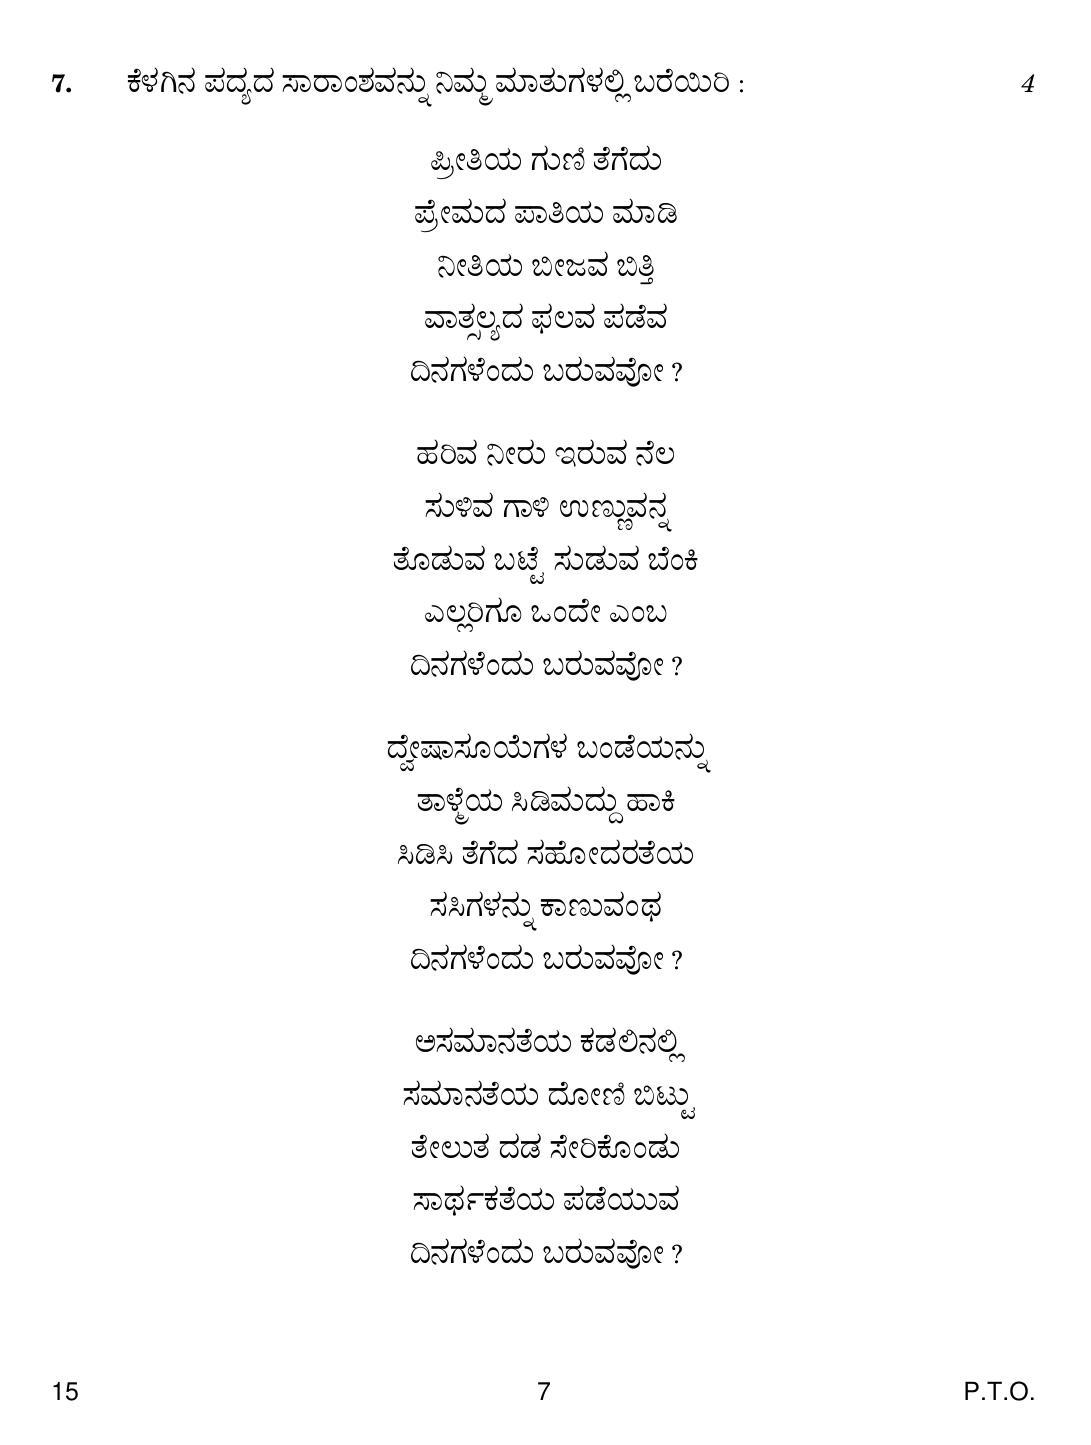 CBSE Class 12 15 Kannada 2018 Question Paper - Page 7